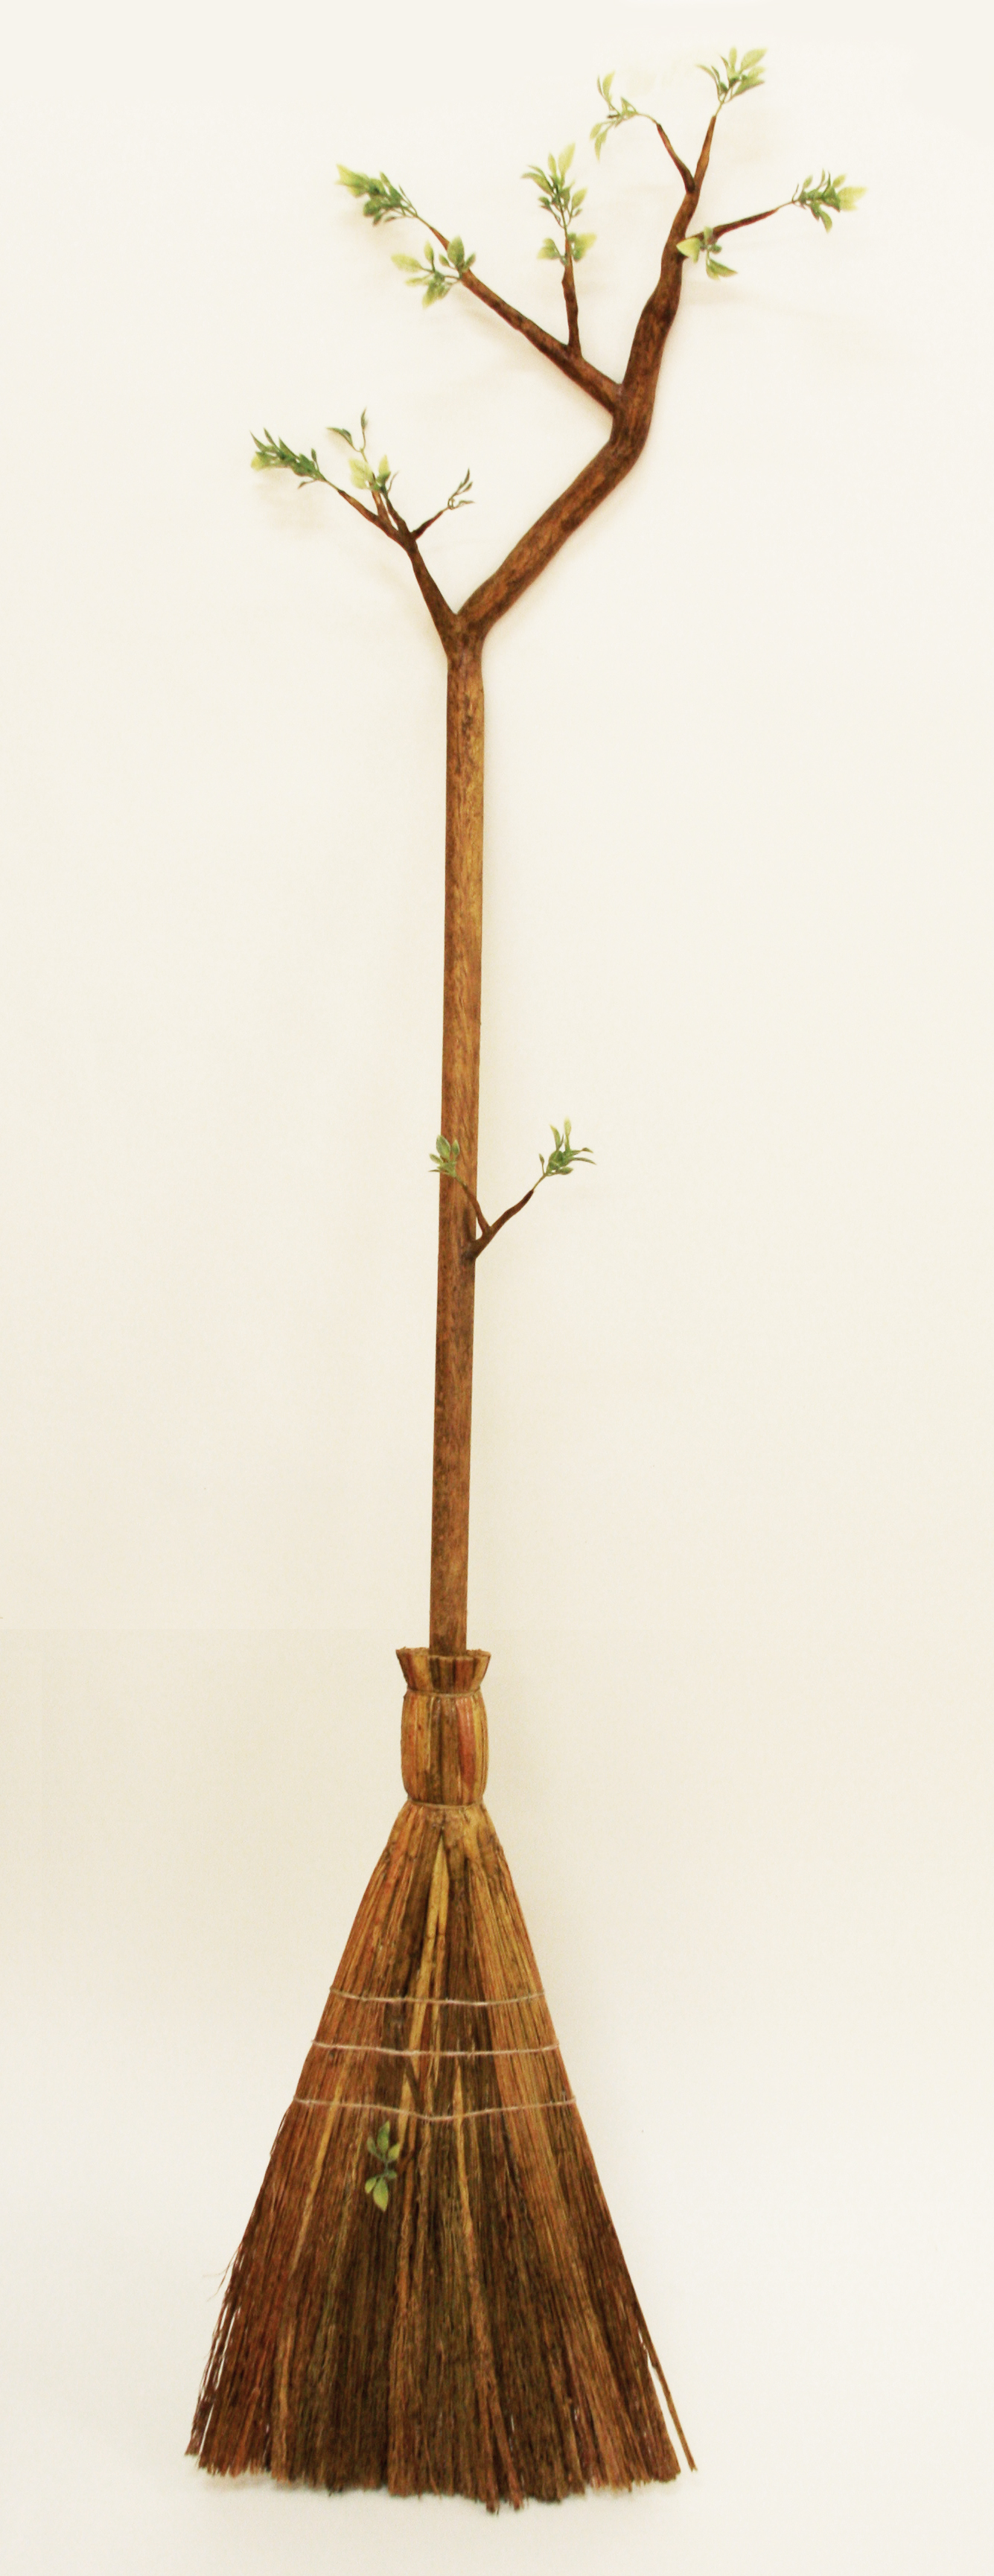 Camille Kachani, Sem Título, Tecnica mista, 146 x 38 x 17 cm, 2013.